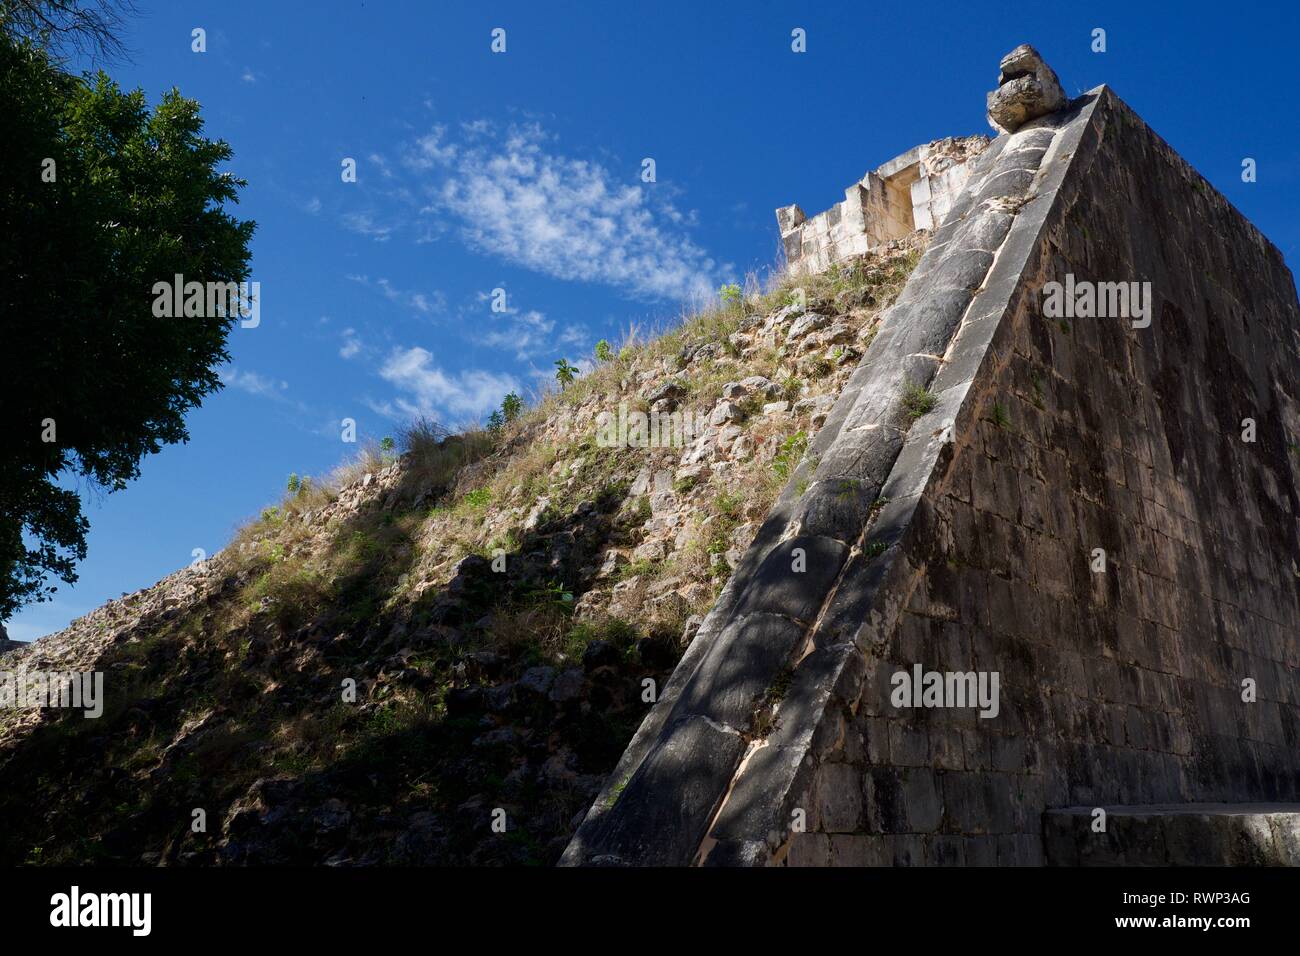 Pyramid of the Sorcerer in Uxmal ruins of ancient Mayan town, Yucatan Mexico Stock Photo